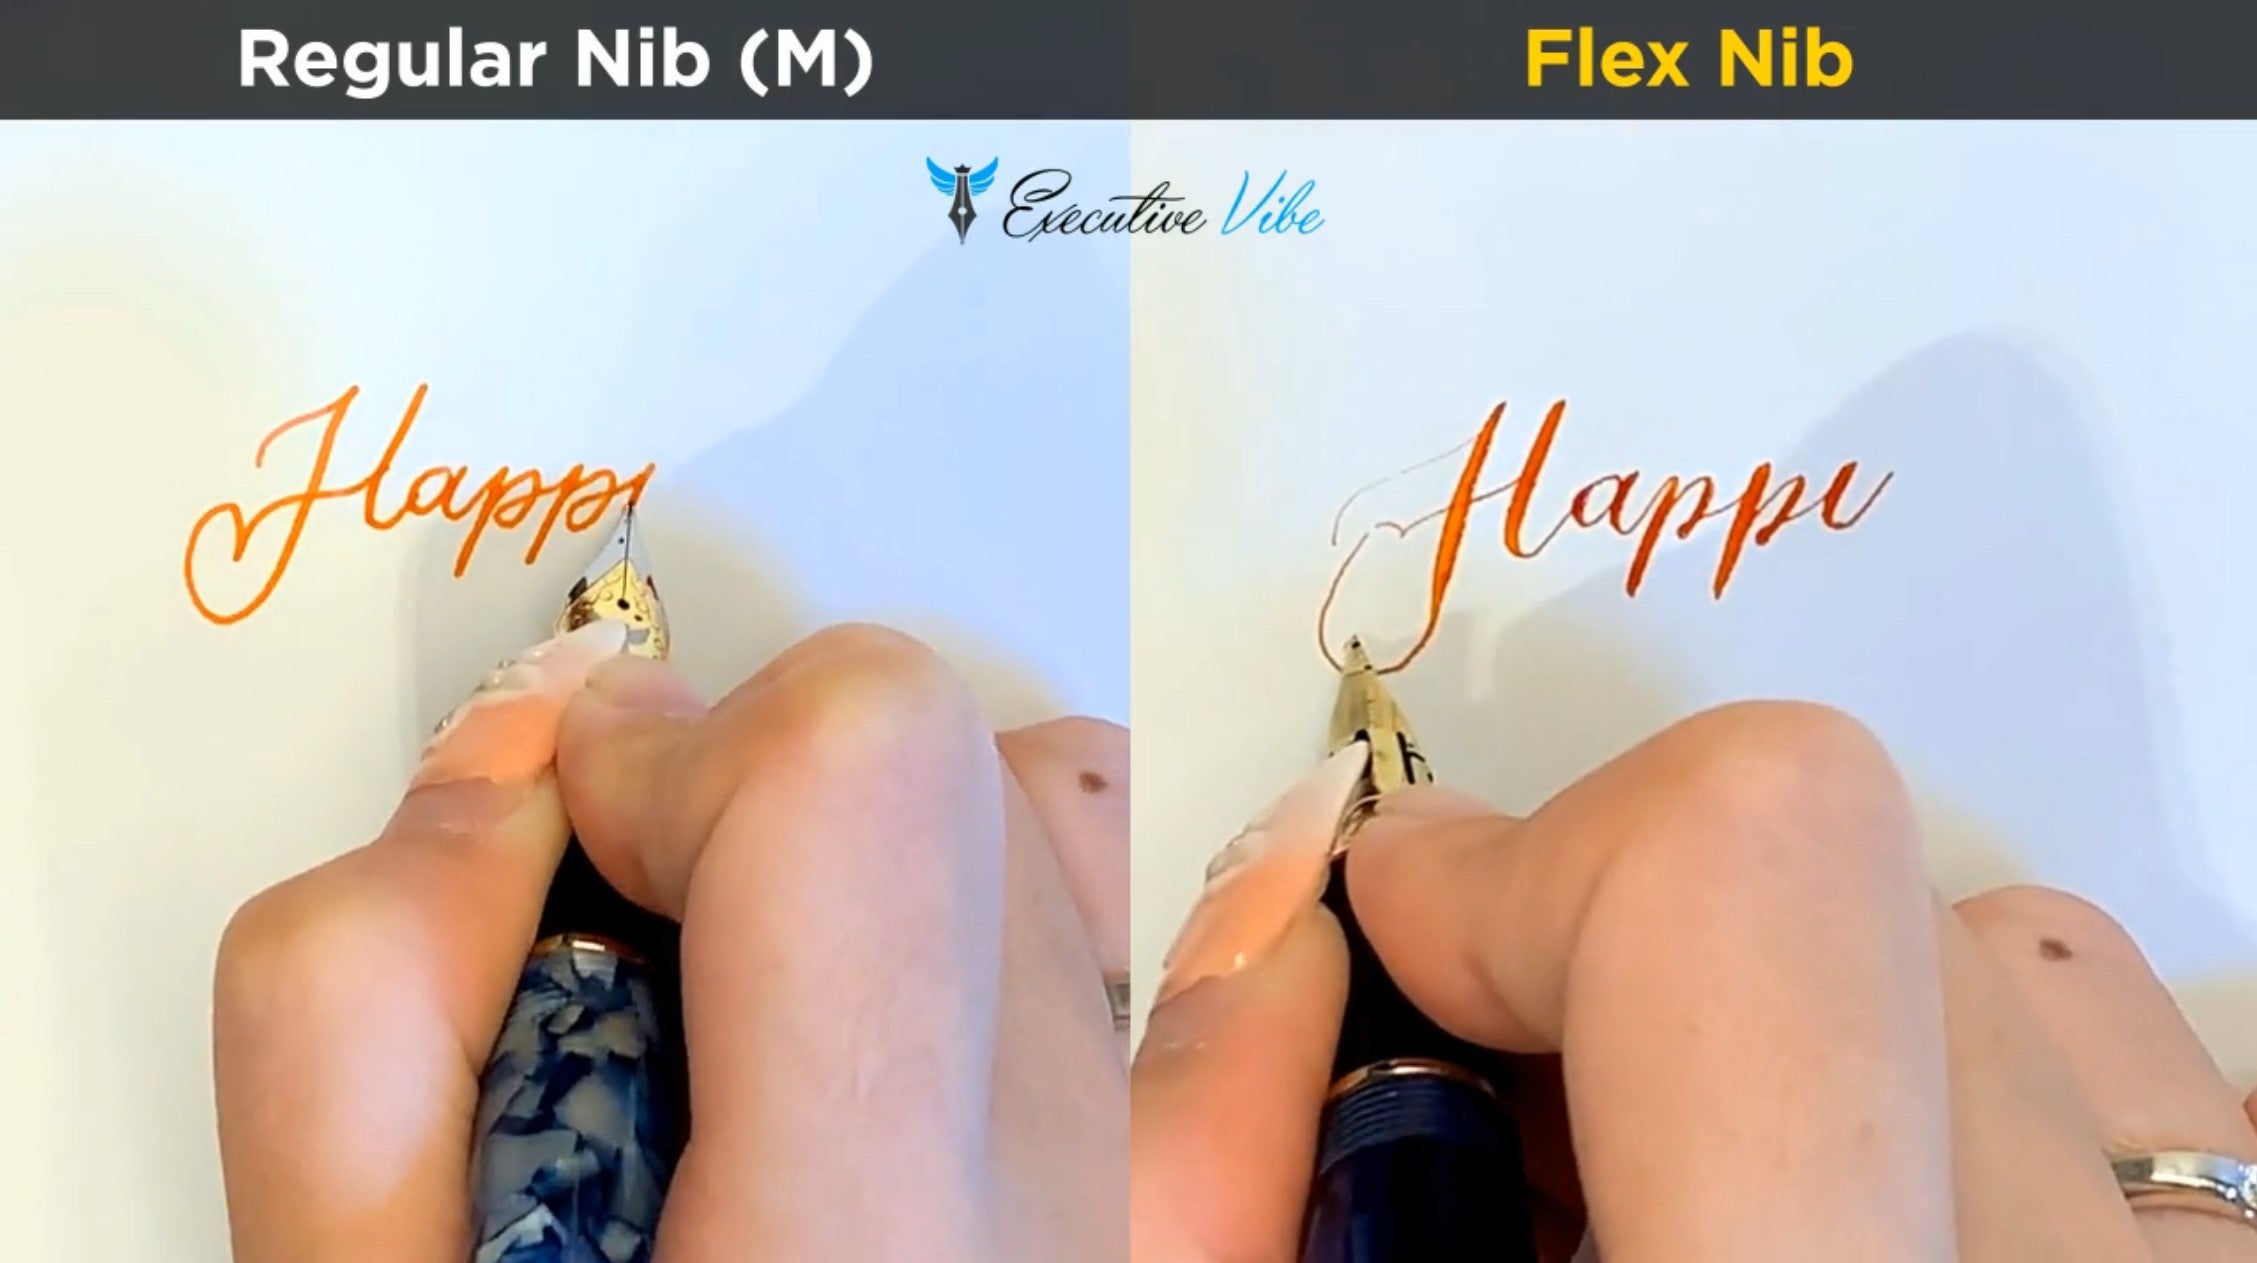 Load video: Comparison Video: Flex Nib vs Regular Nib